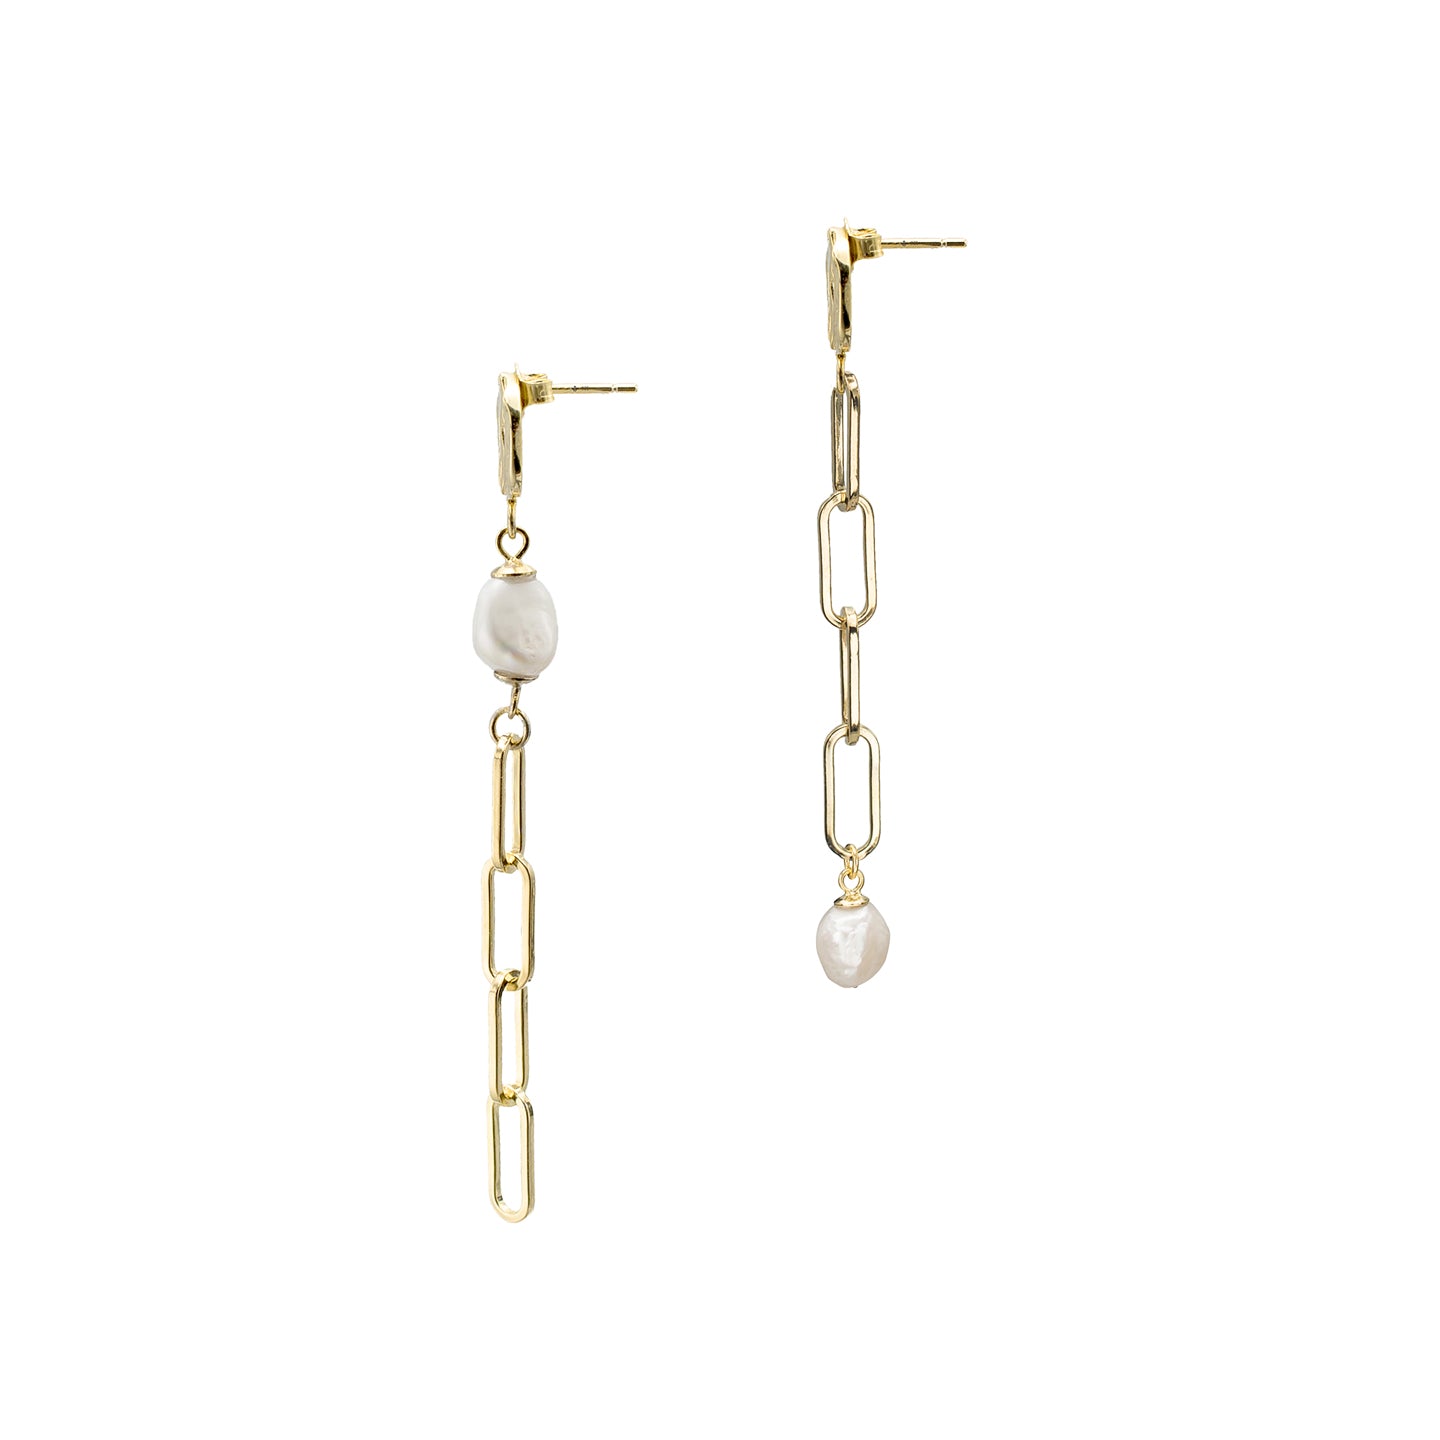 Cercei argint cu perle asimetrici Flawless - placati aur galben 18K